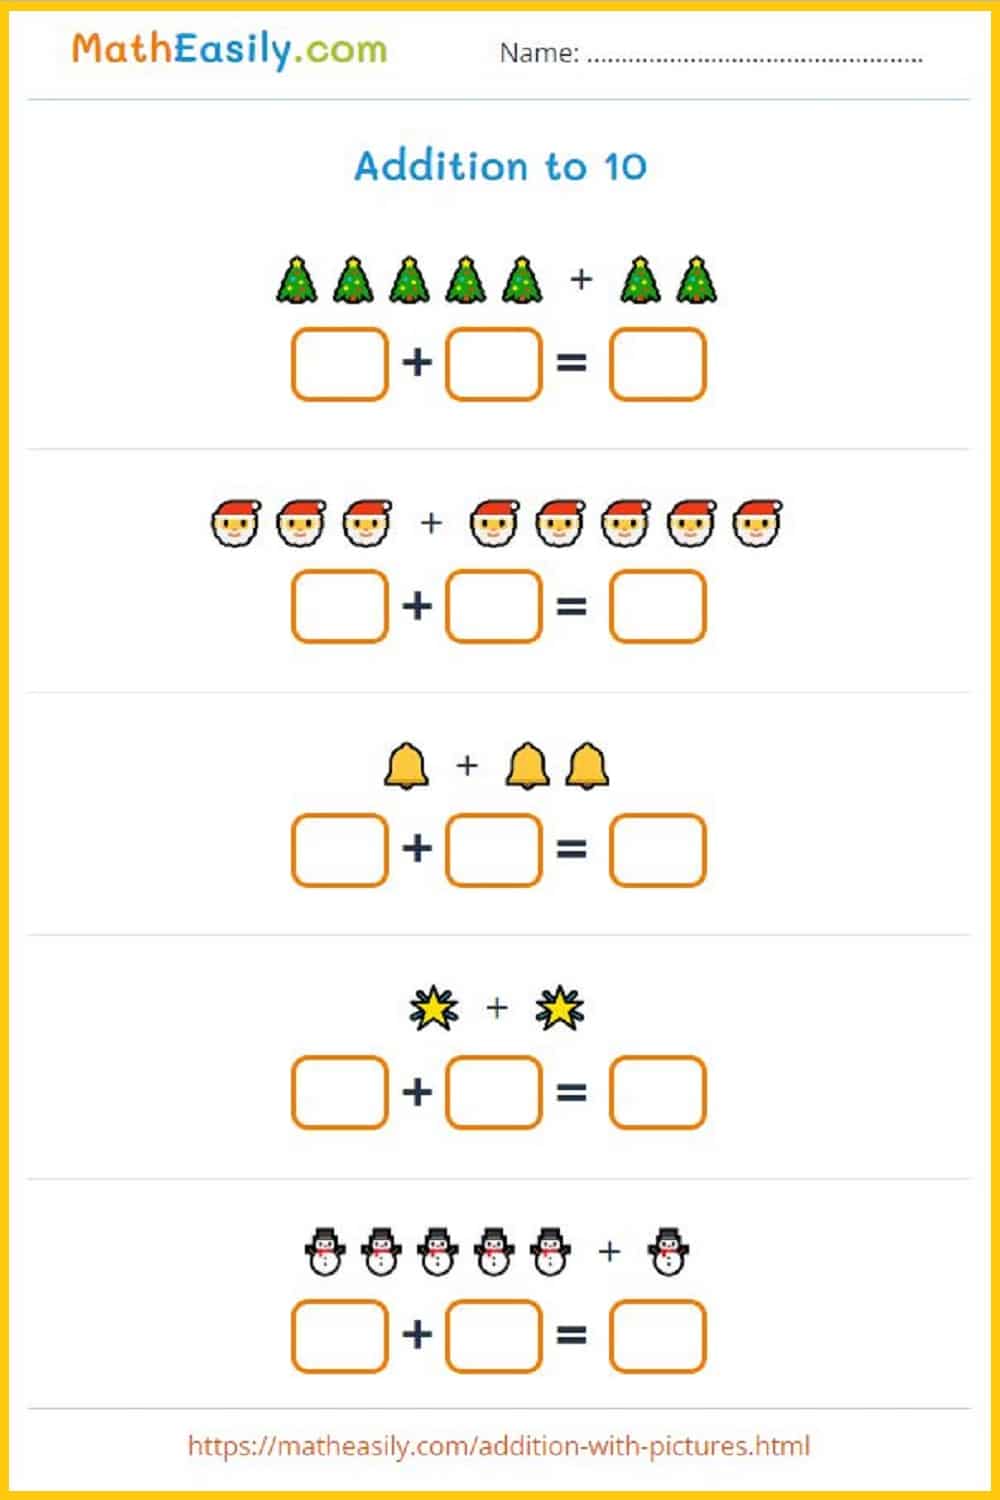 Free Christmas math games Cool math. 
Printable Christmas math games and puzles. Christmas math activities. Free online Christmas games for kids online.
math Christmas addition games.